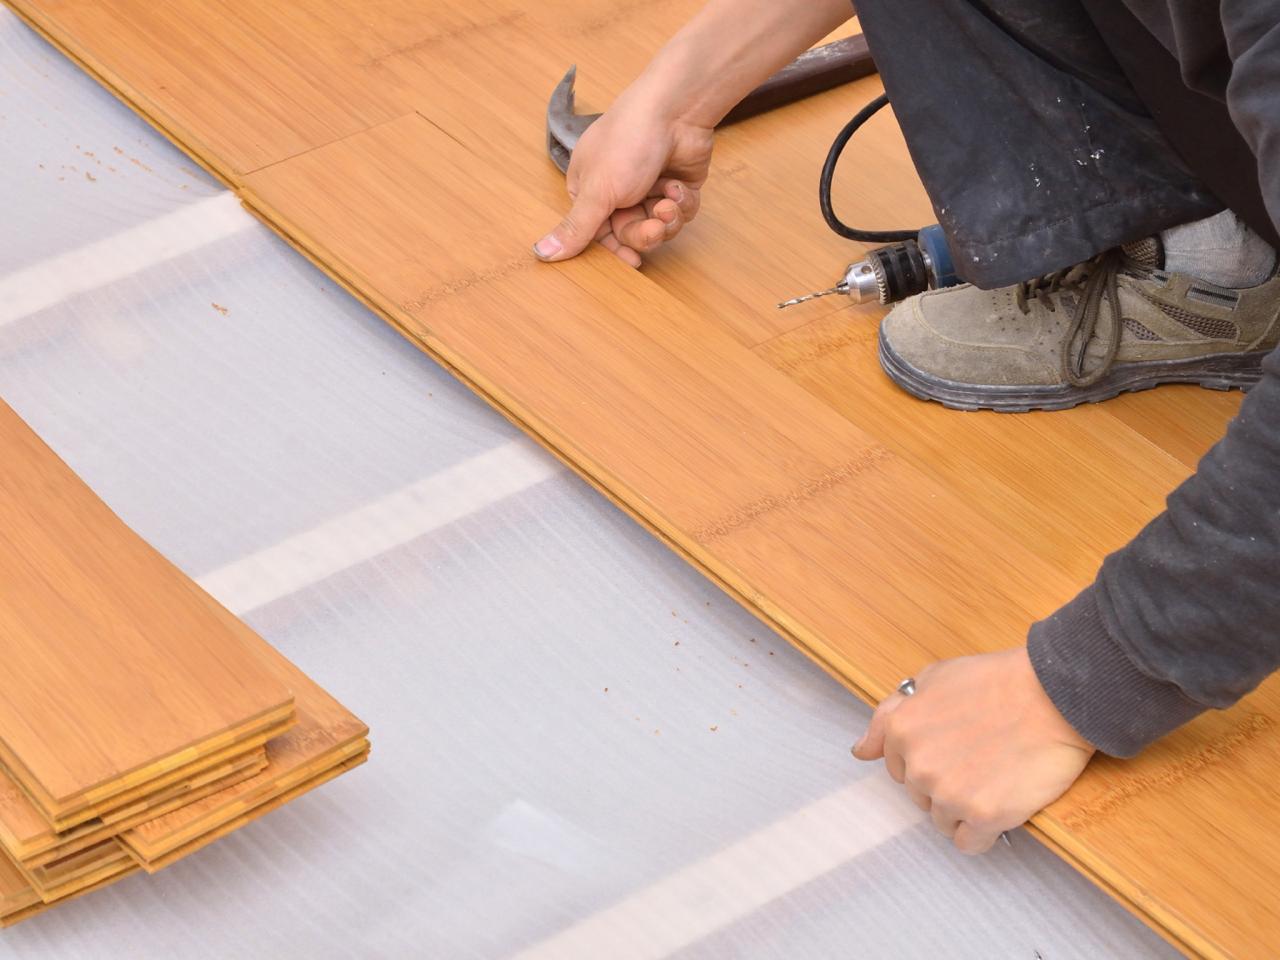 Bamboo Floor Installation Diy, How To Install Floating Engineered Hardwood Floors On Concrete